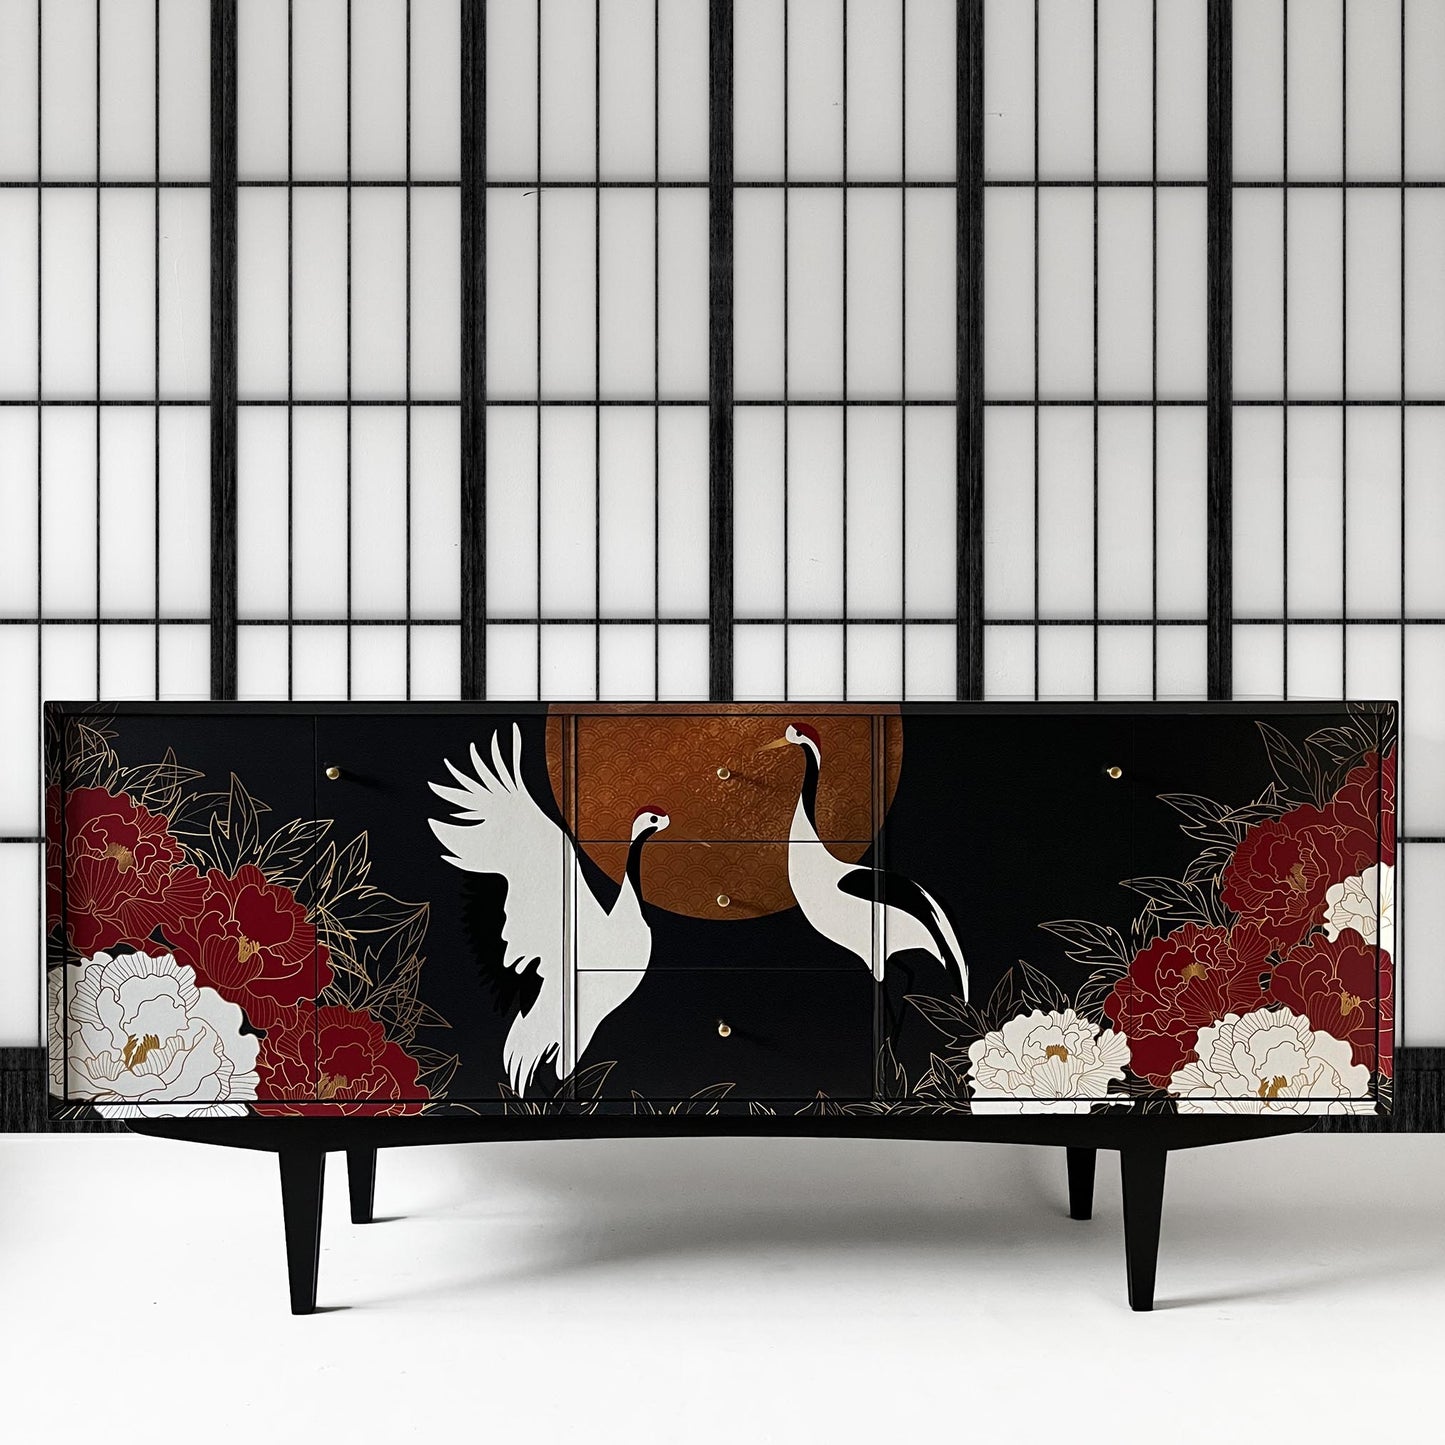 Vintage sideboard with oriental Crane and flower design